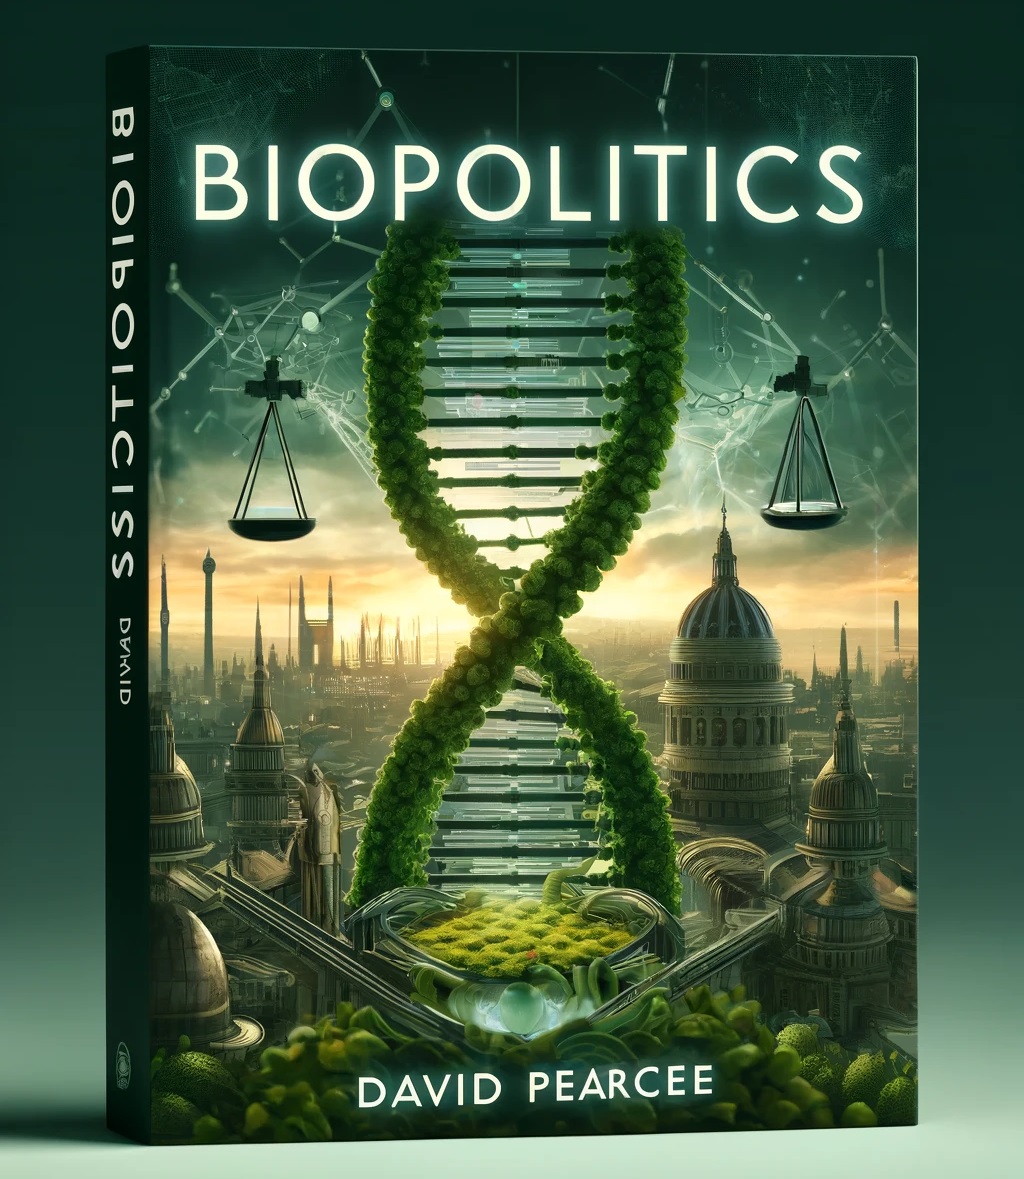 Biopolitics by David Pearce